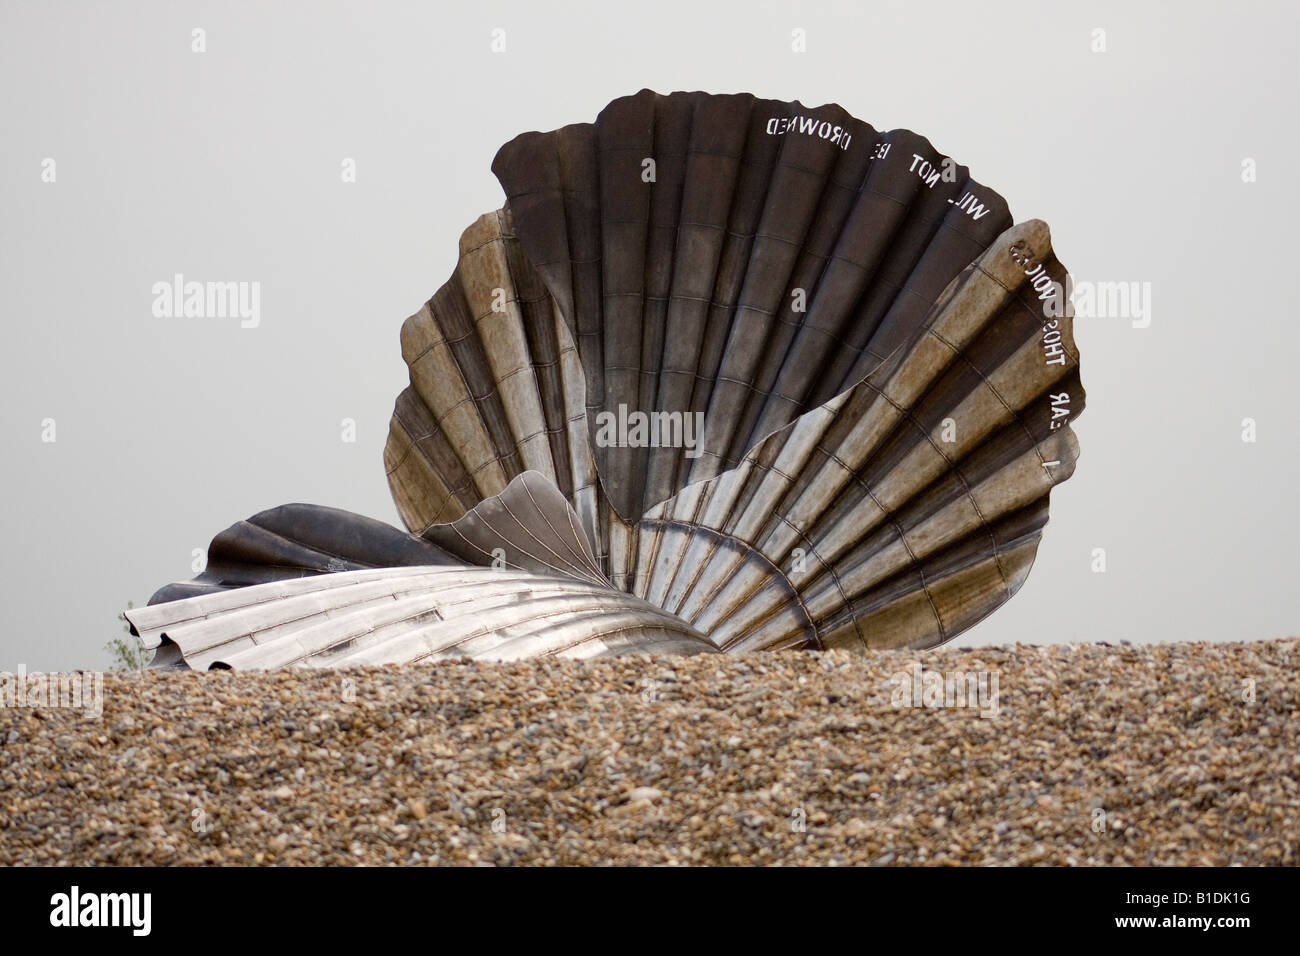 Scallop by Maggi Hambling beach Aldeburgh Suffolk UK Stock Photo